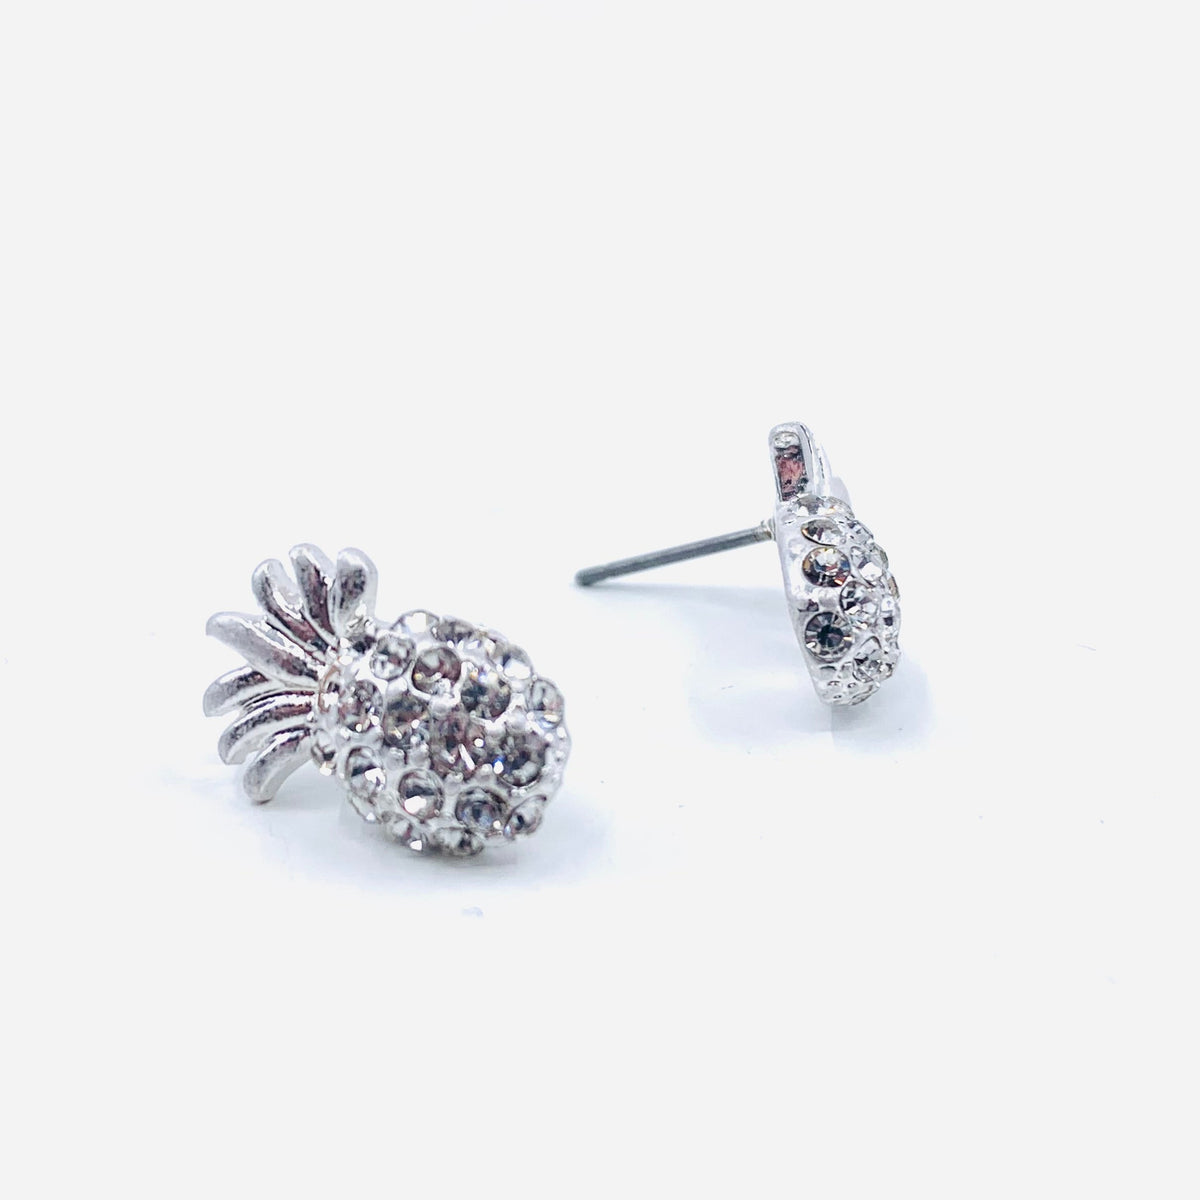 Rhinestone Pineapple Earrings Jewelry Cloie NY 